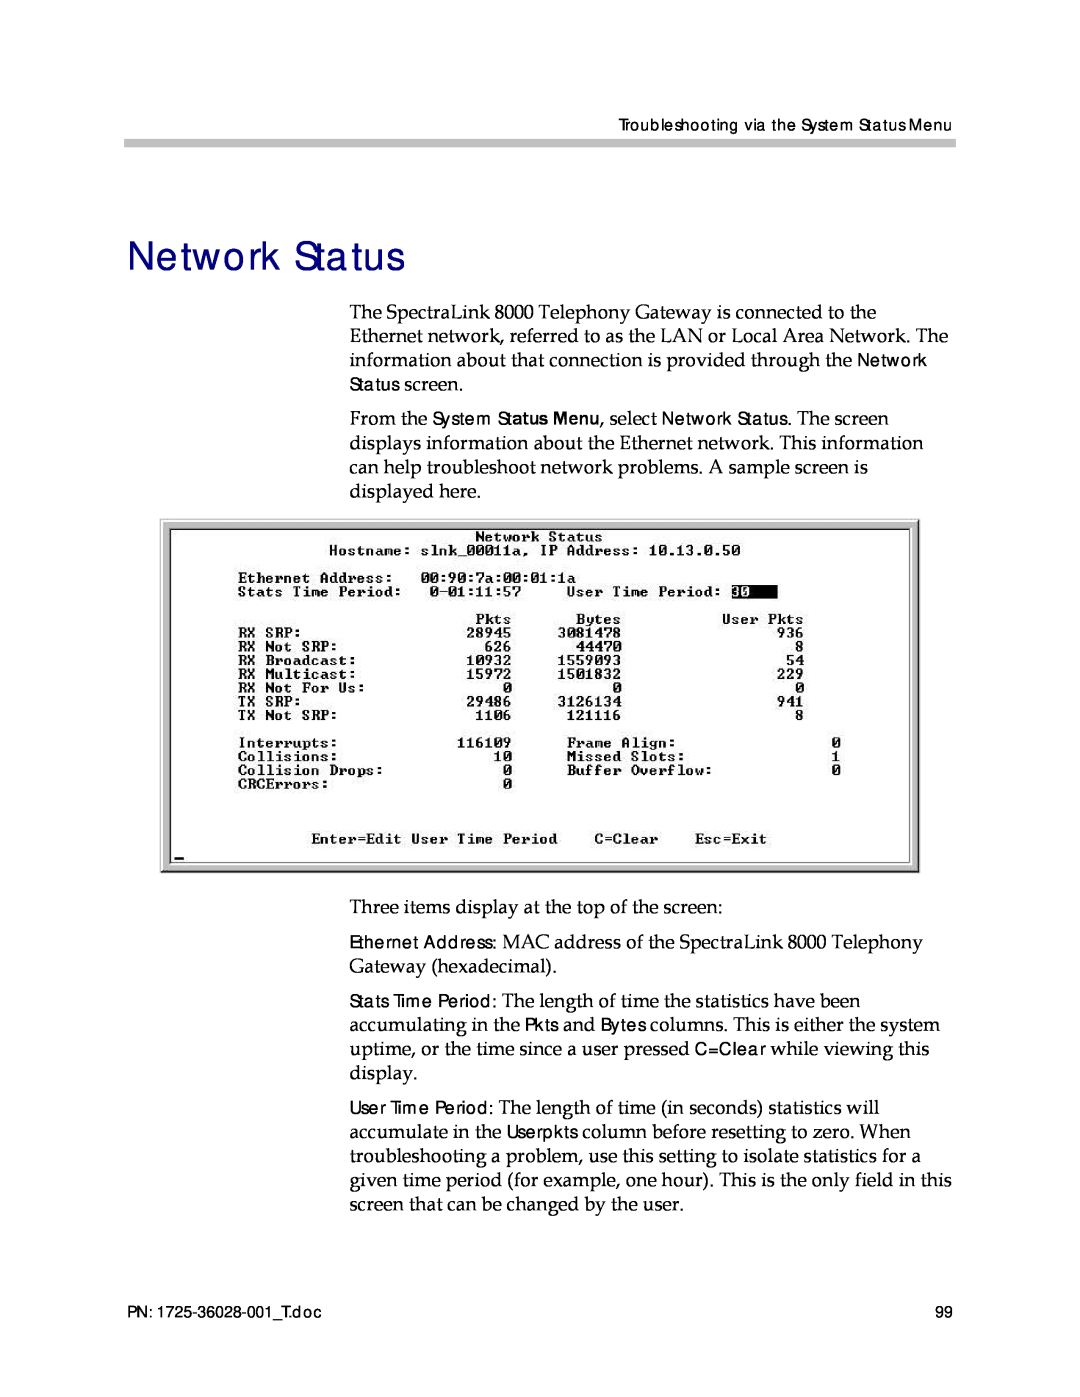 Polycom 1725-36028-001 manual Network Status 